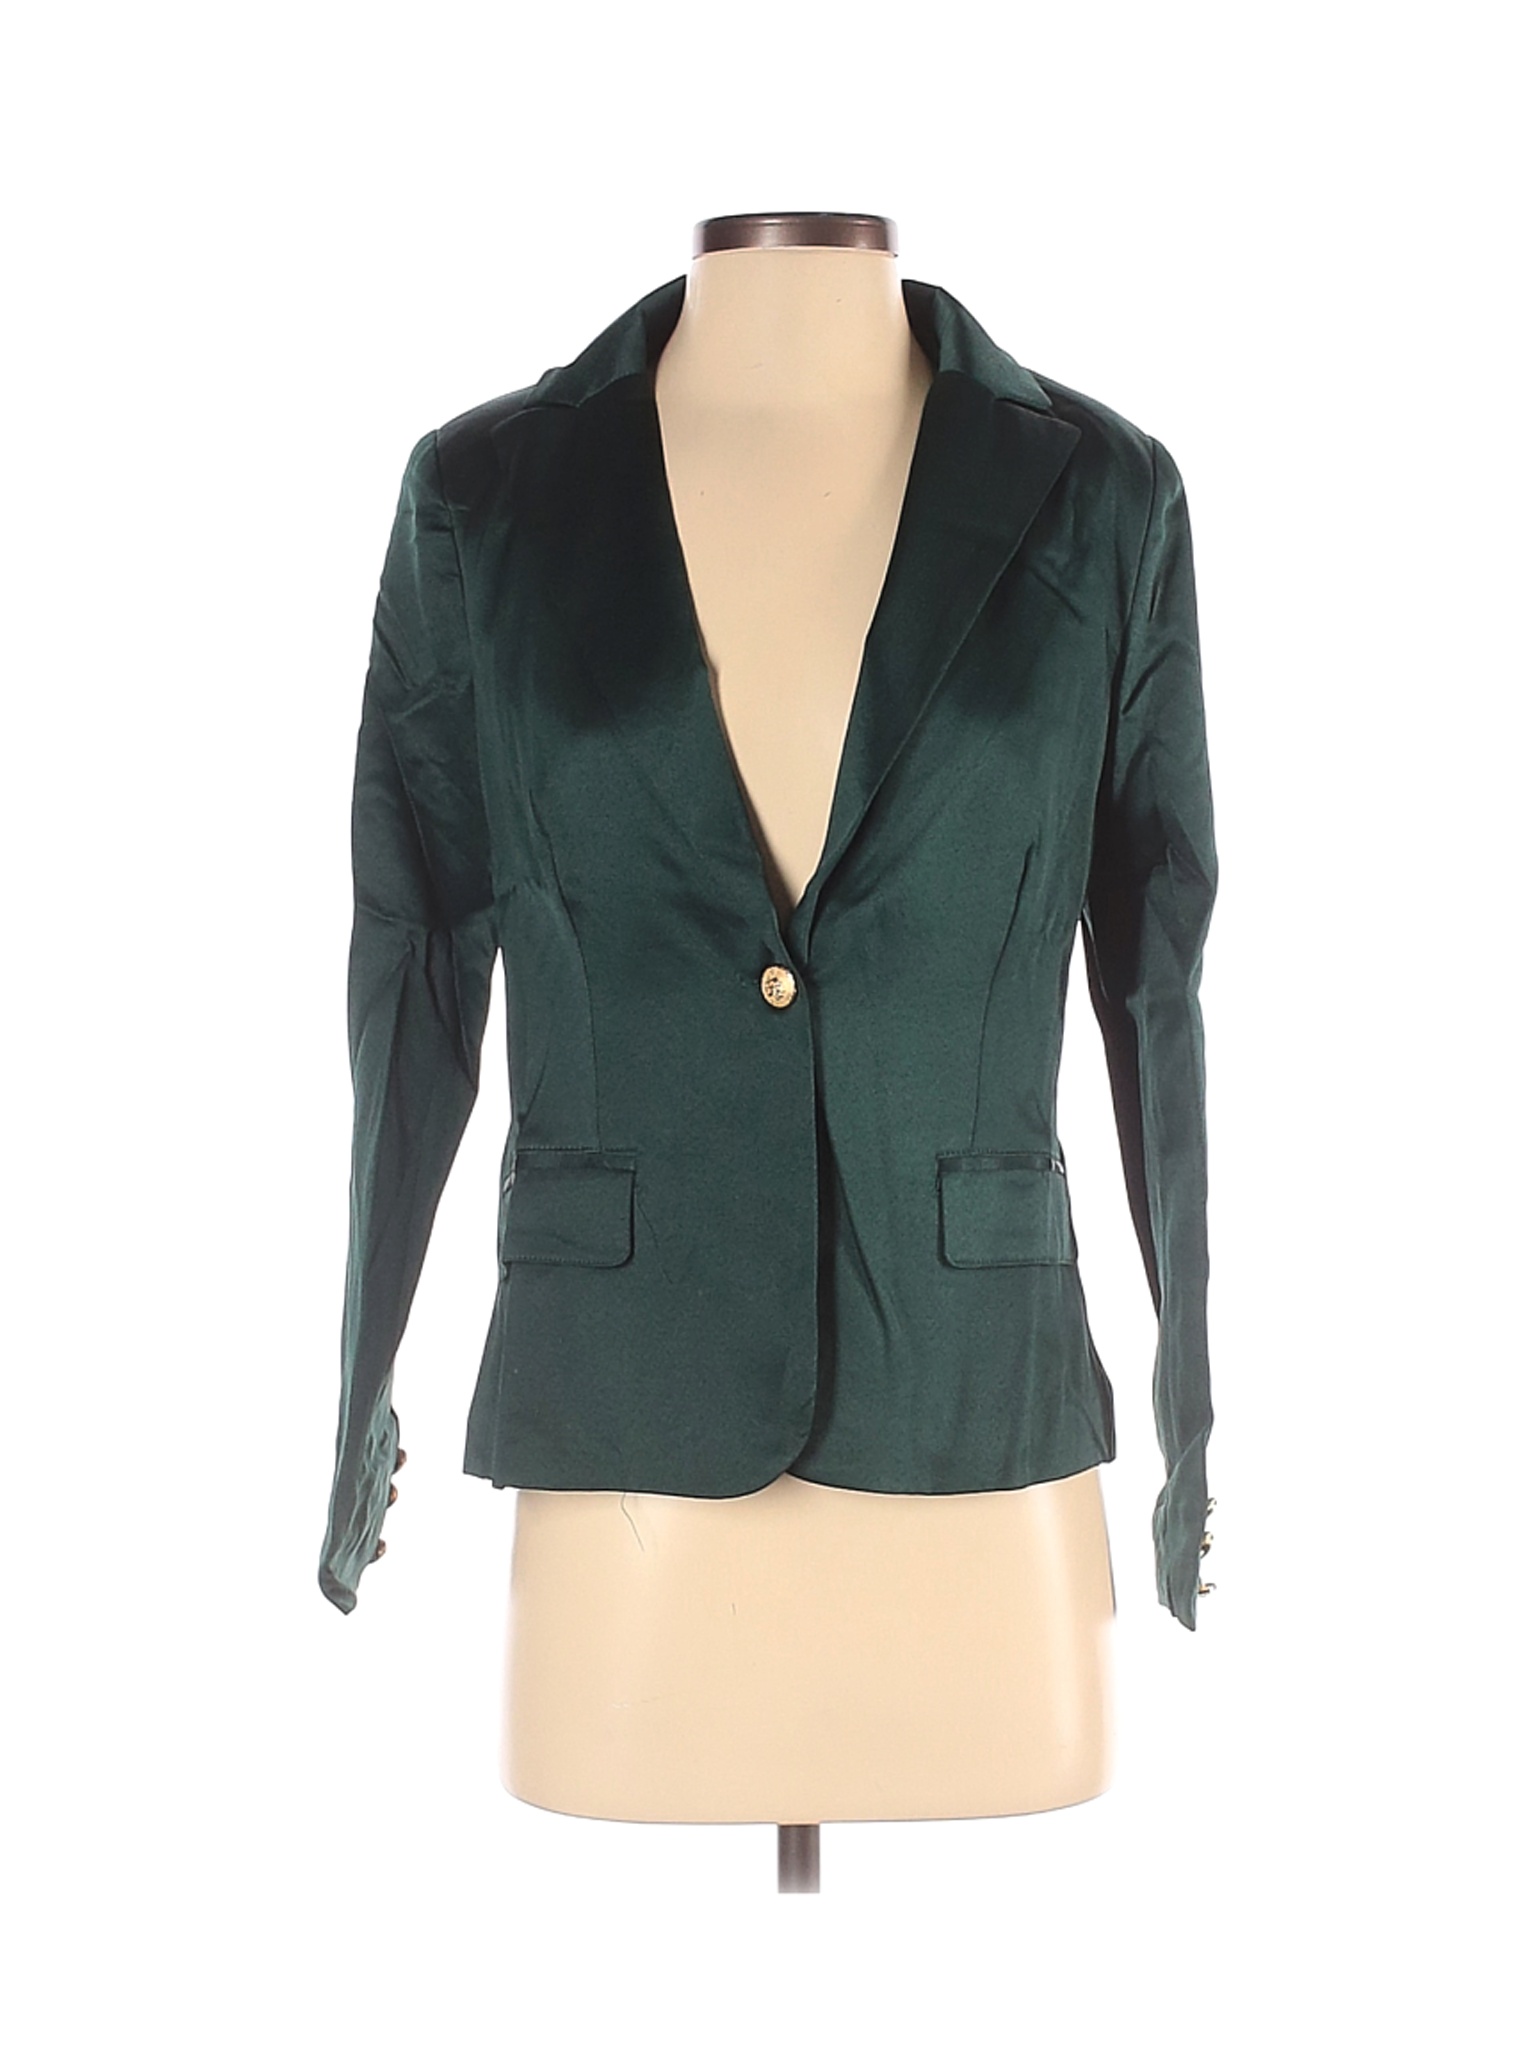 NWT Available Women Green Blazer S | eBay